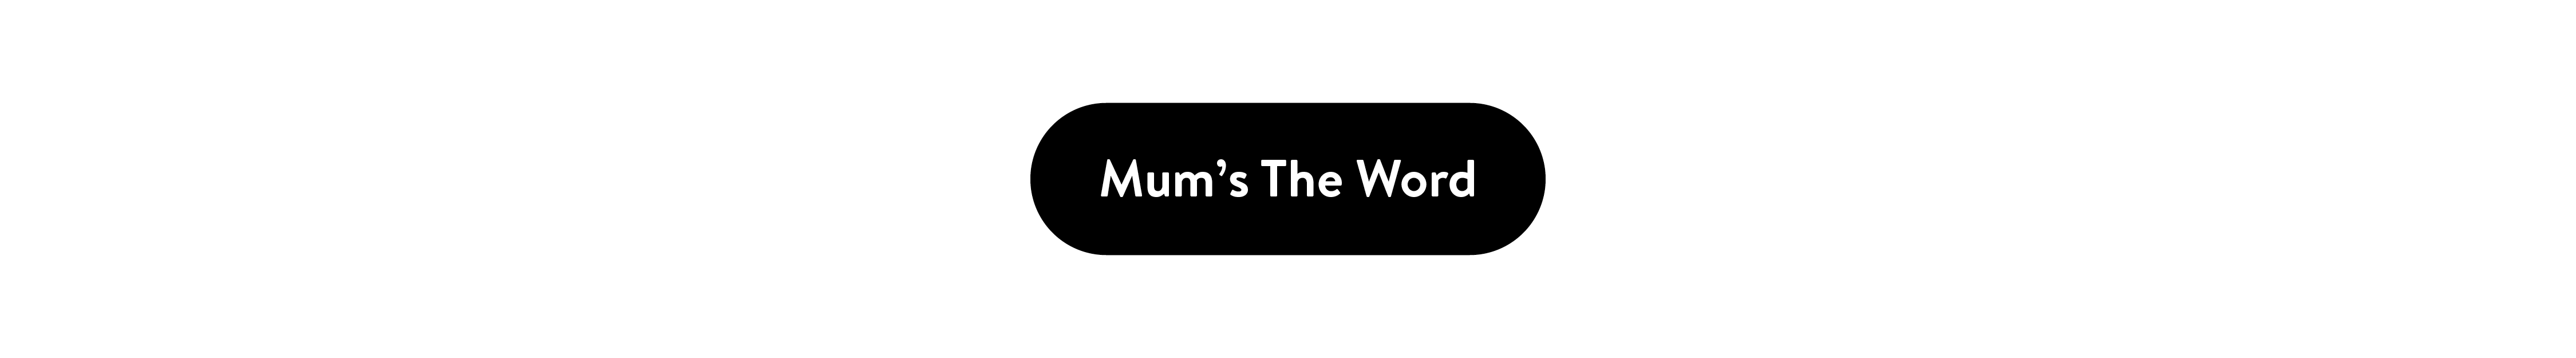 CTA button Mum's The Word